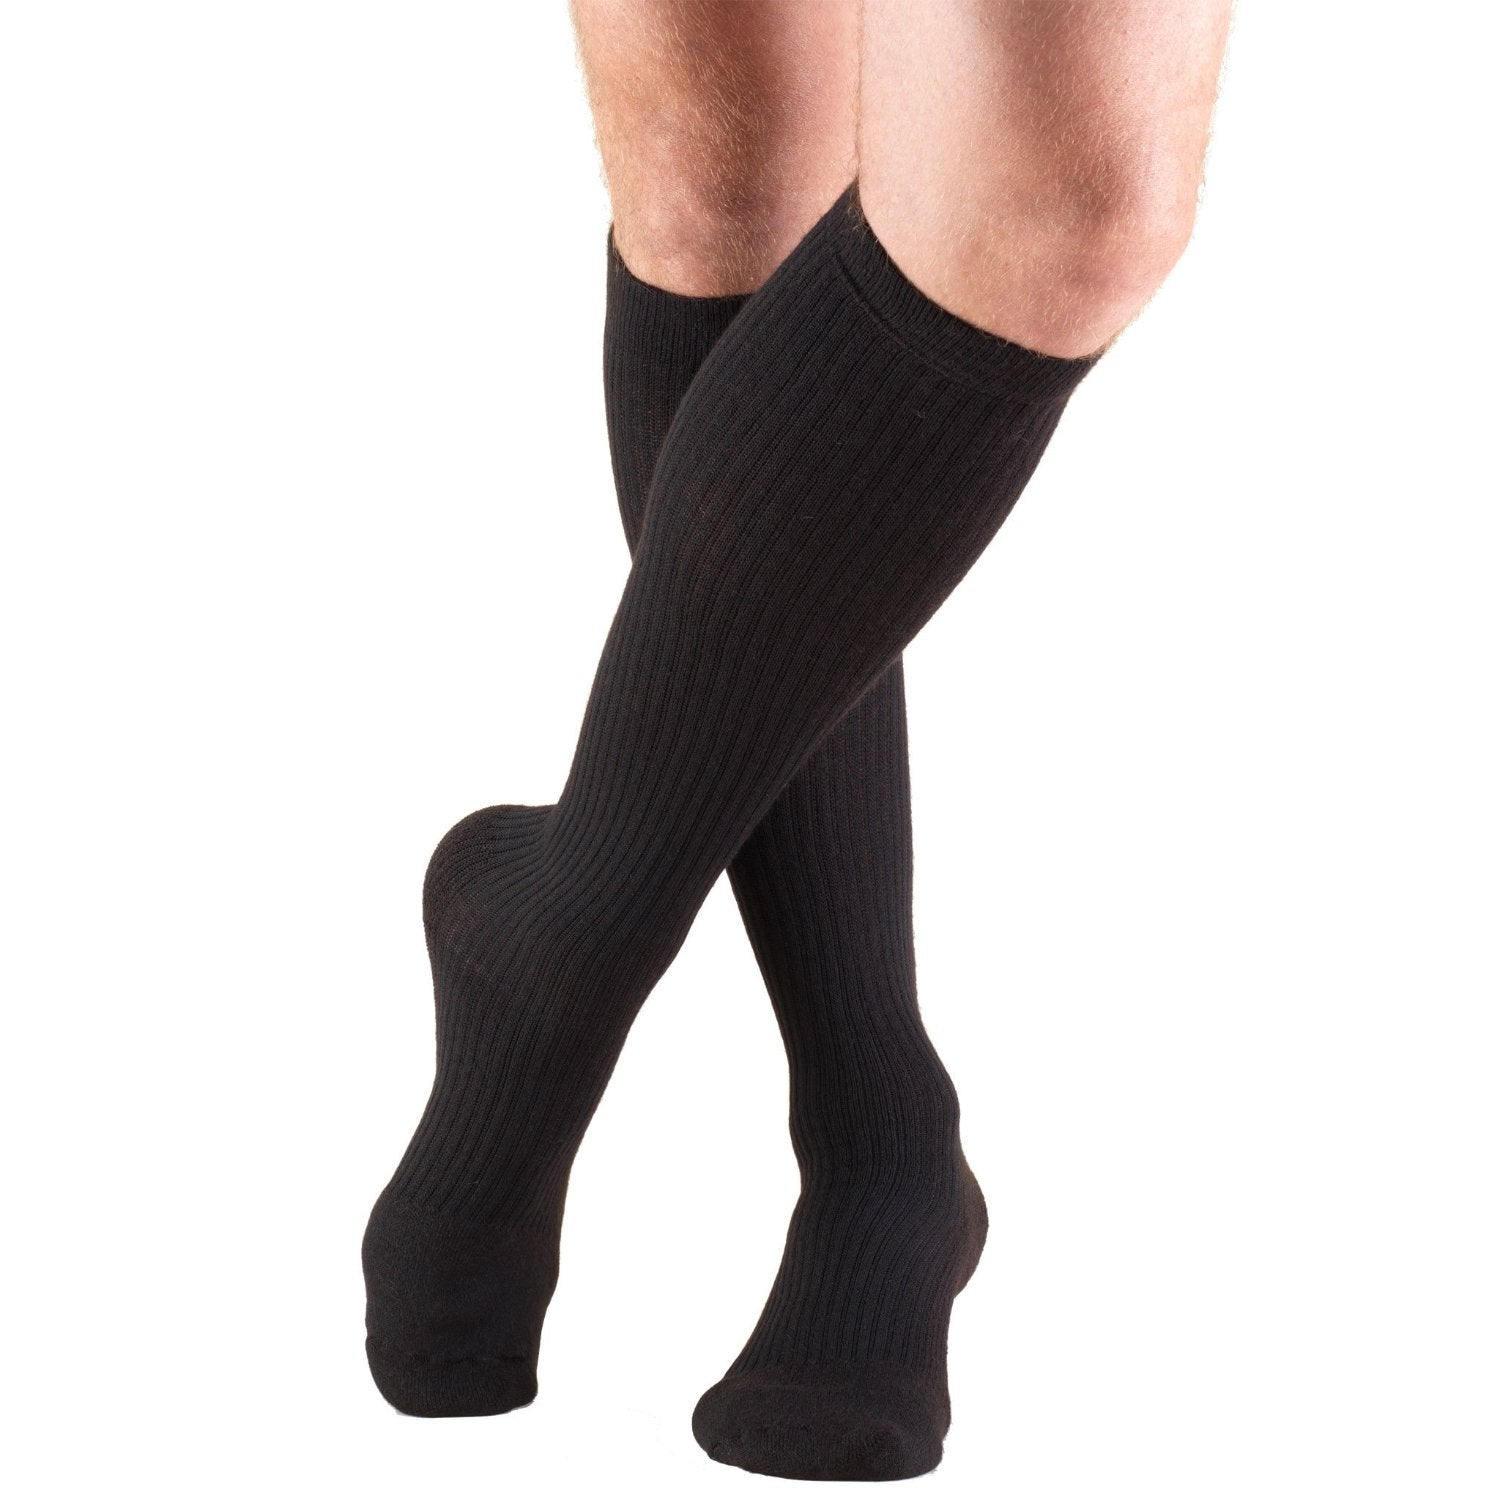 Men's Knee High Casual Cushion Foot Socks